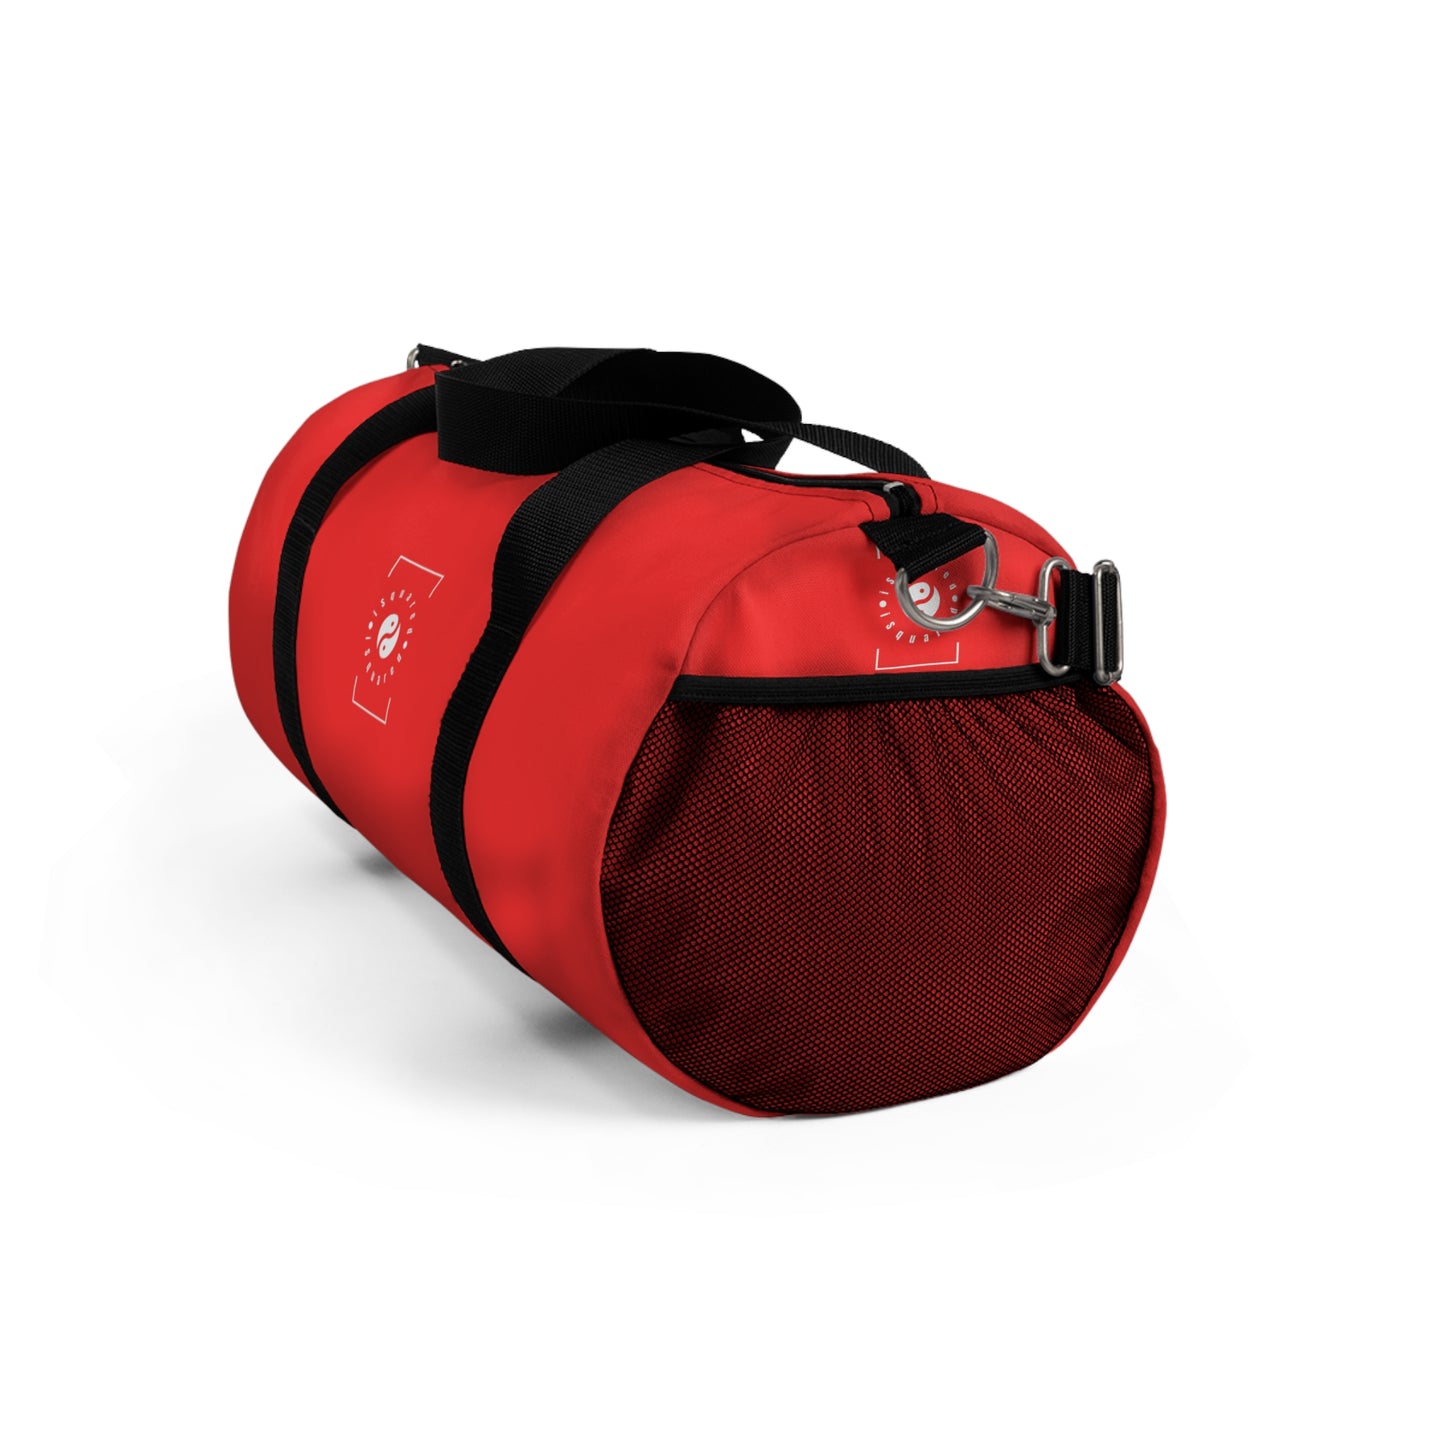 Bright Red FF3131 - Duffle Bag